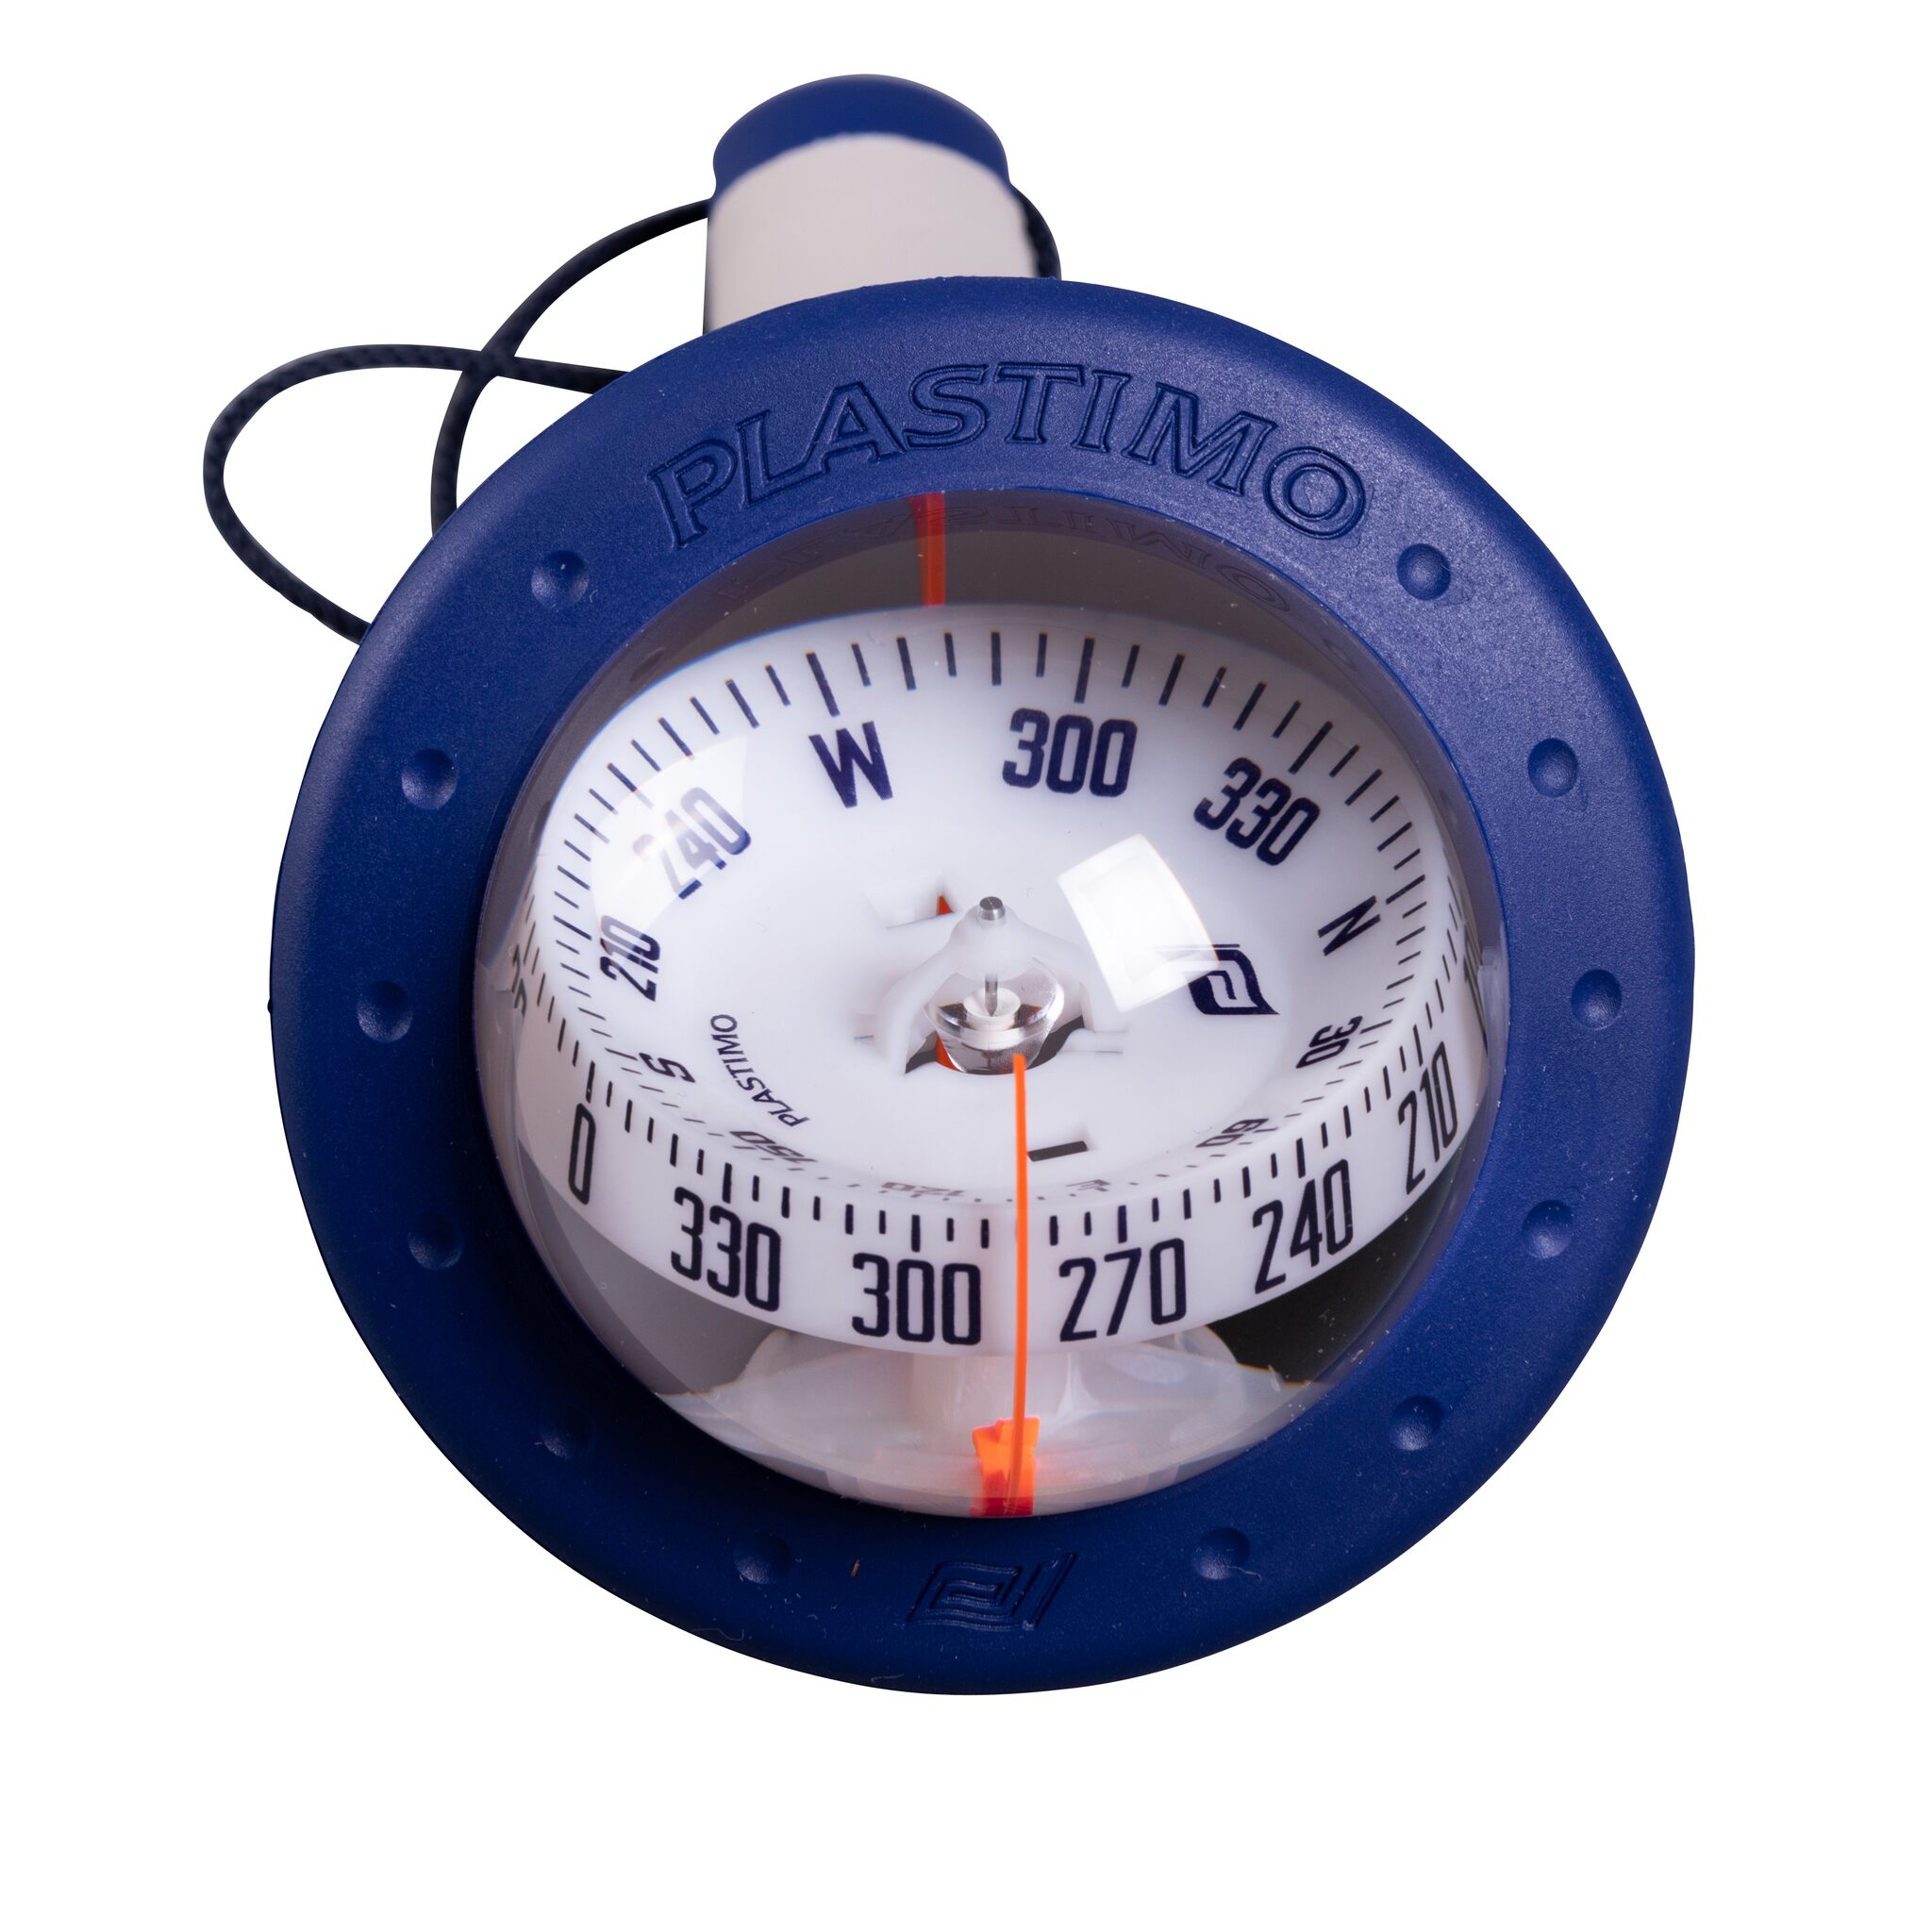 Kompass IRIS 100 in blau